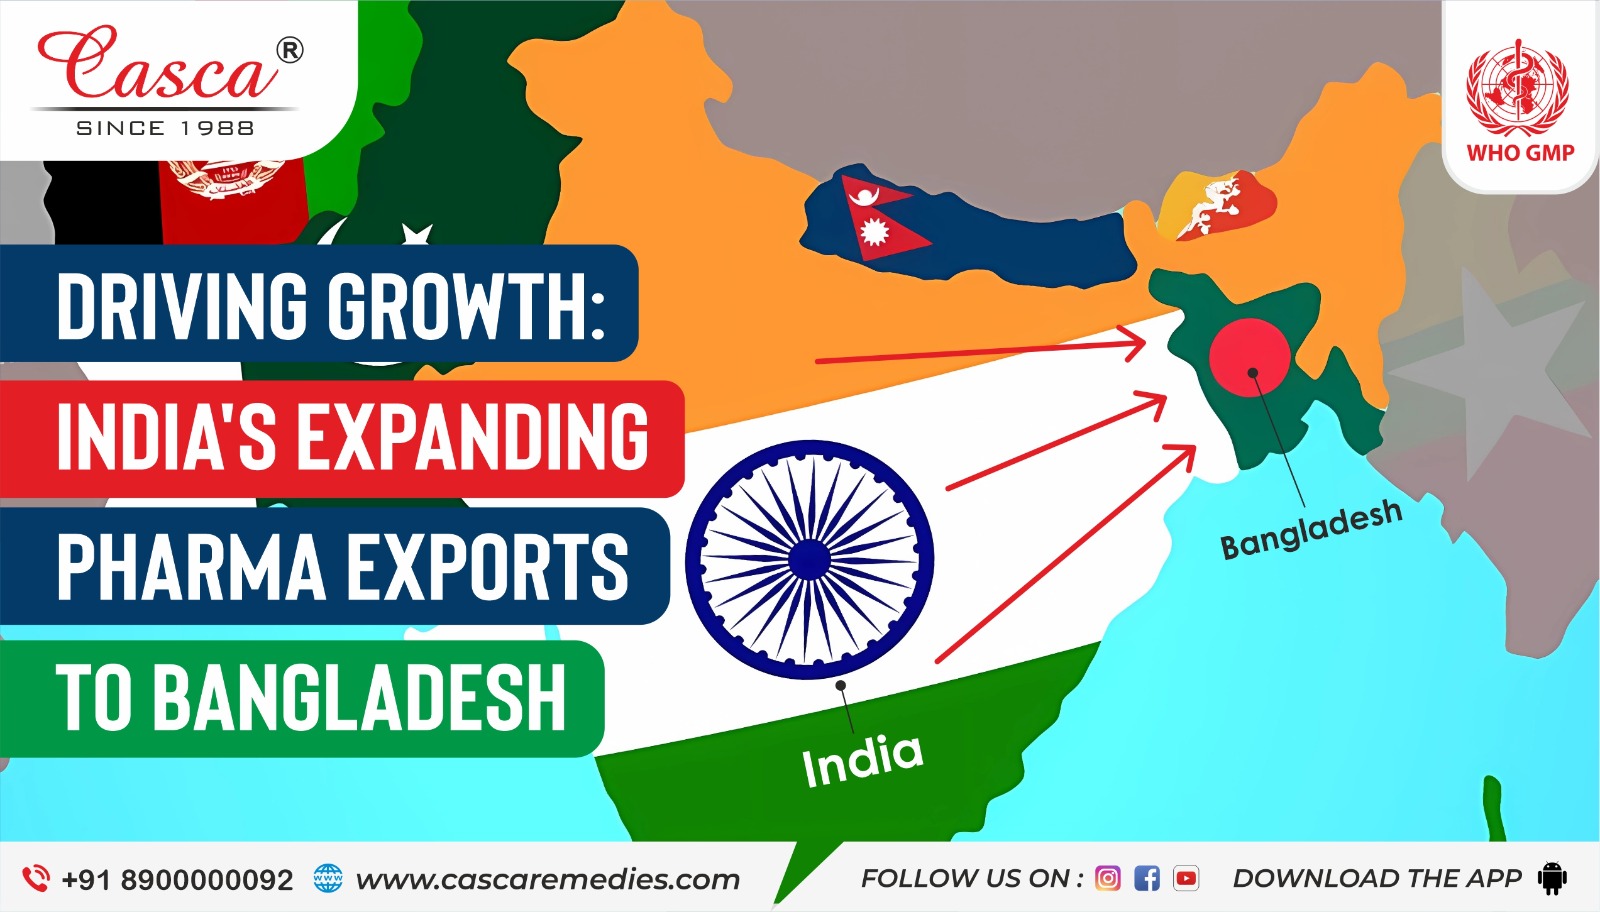 Driving growth: India’s expanding pharma exports to Bangladesh